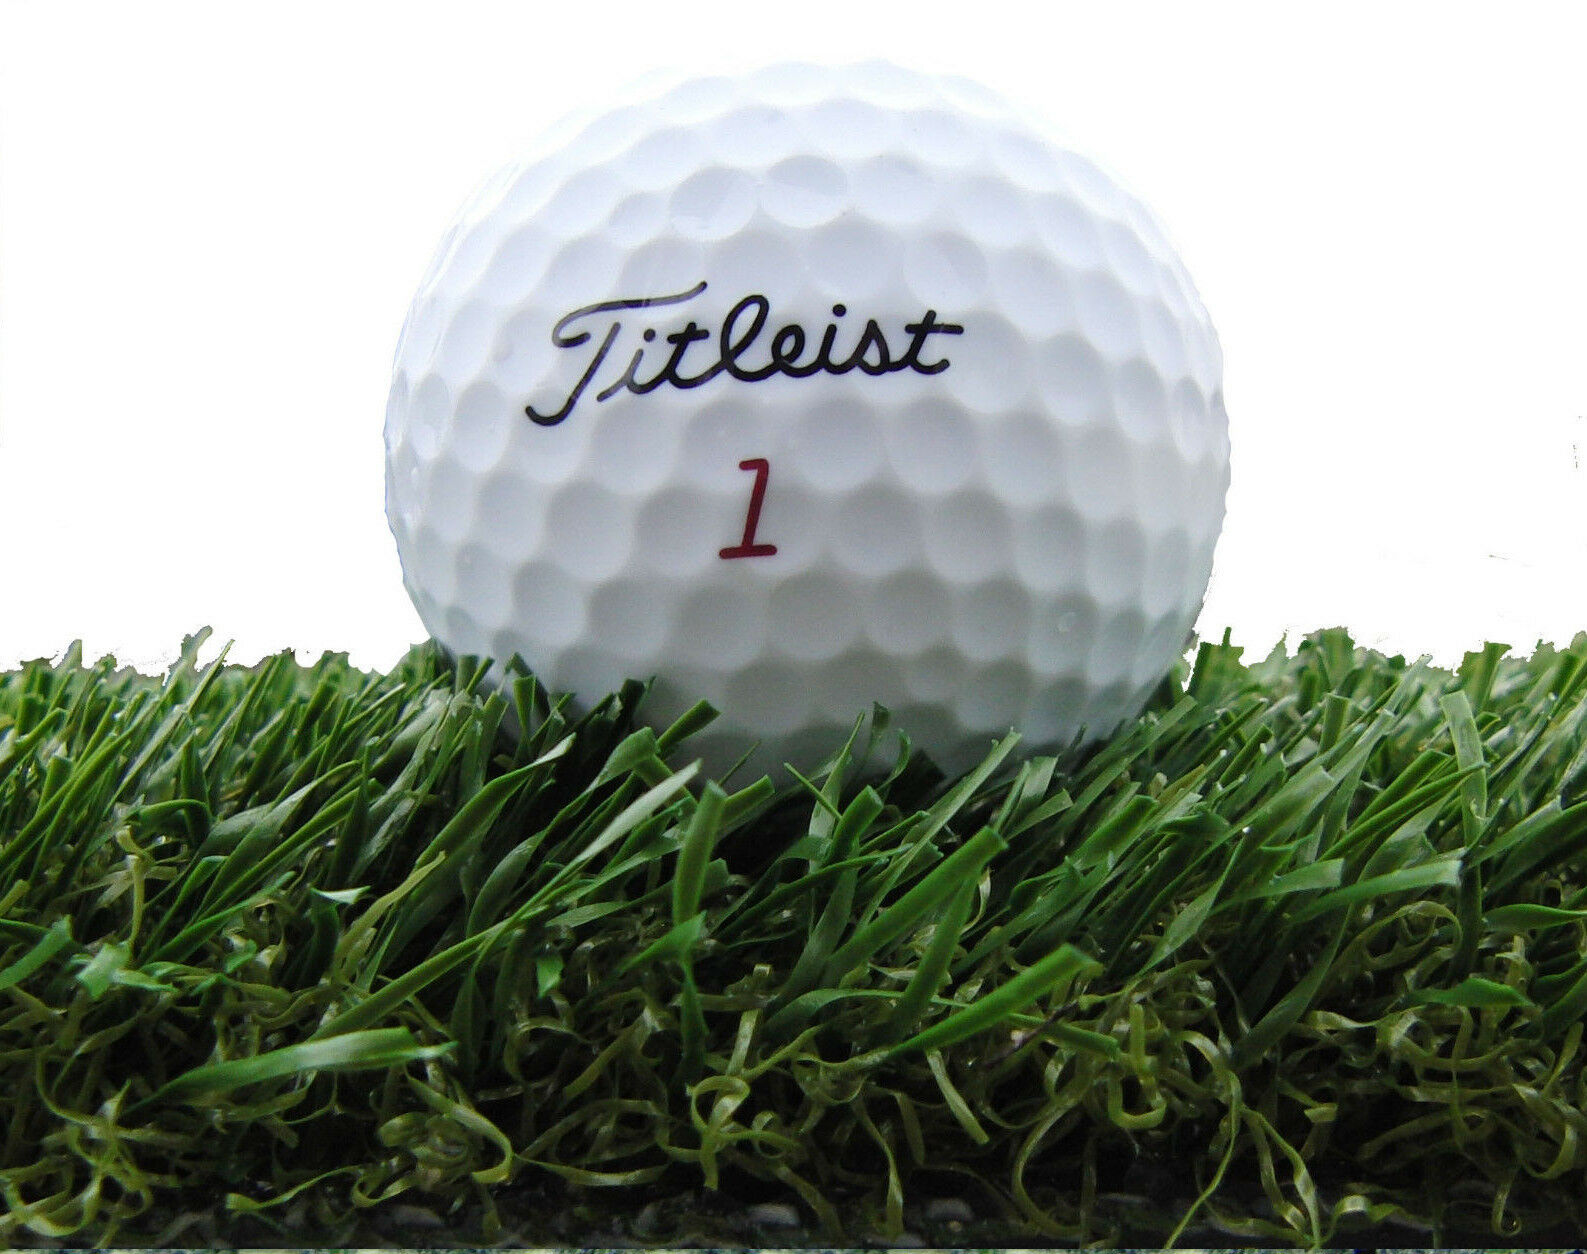 Best Golf Hitting Mat (3x3 Foot) Dual Turf Golf Practice Mat - Holds Real Tee